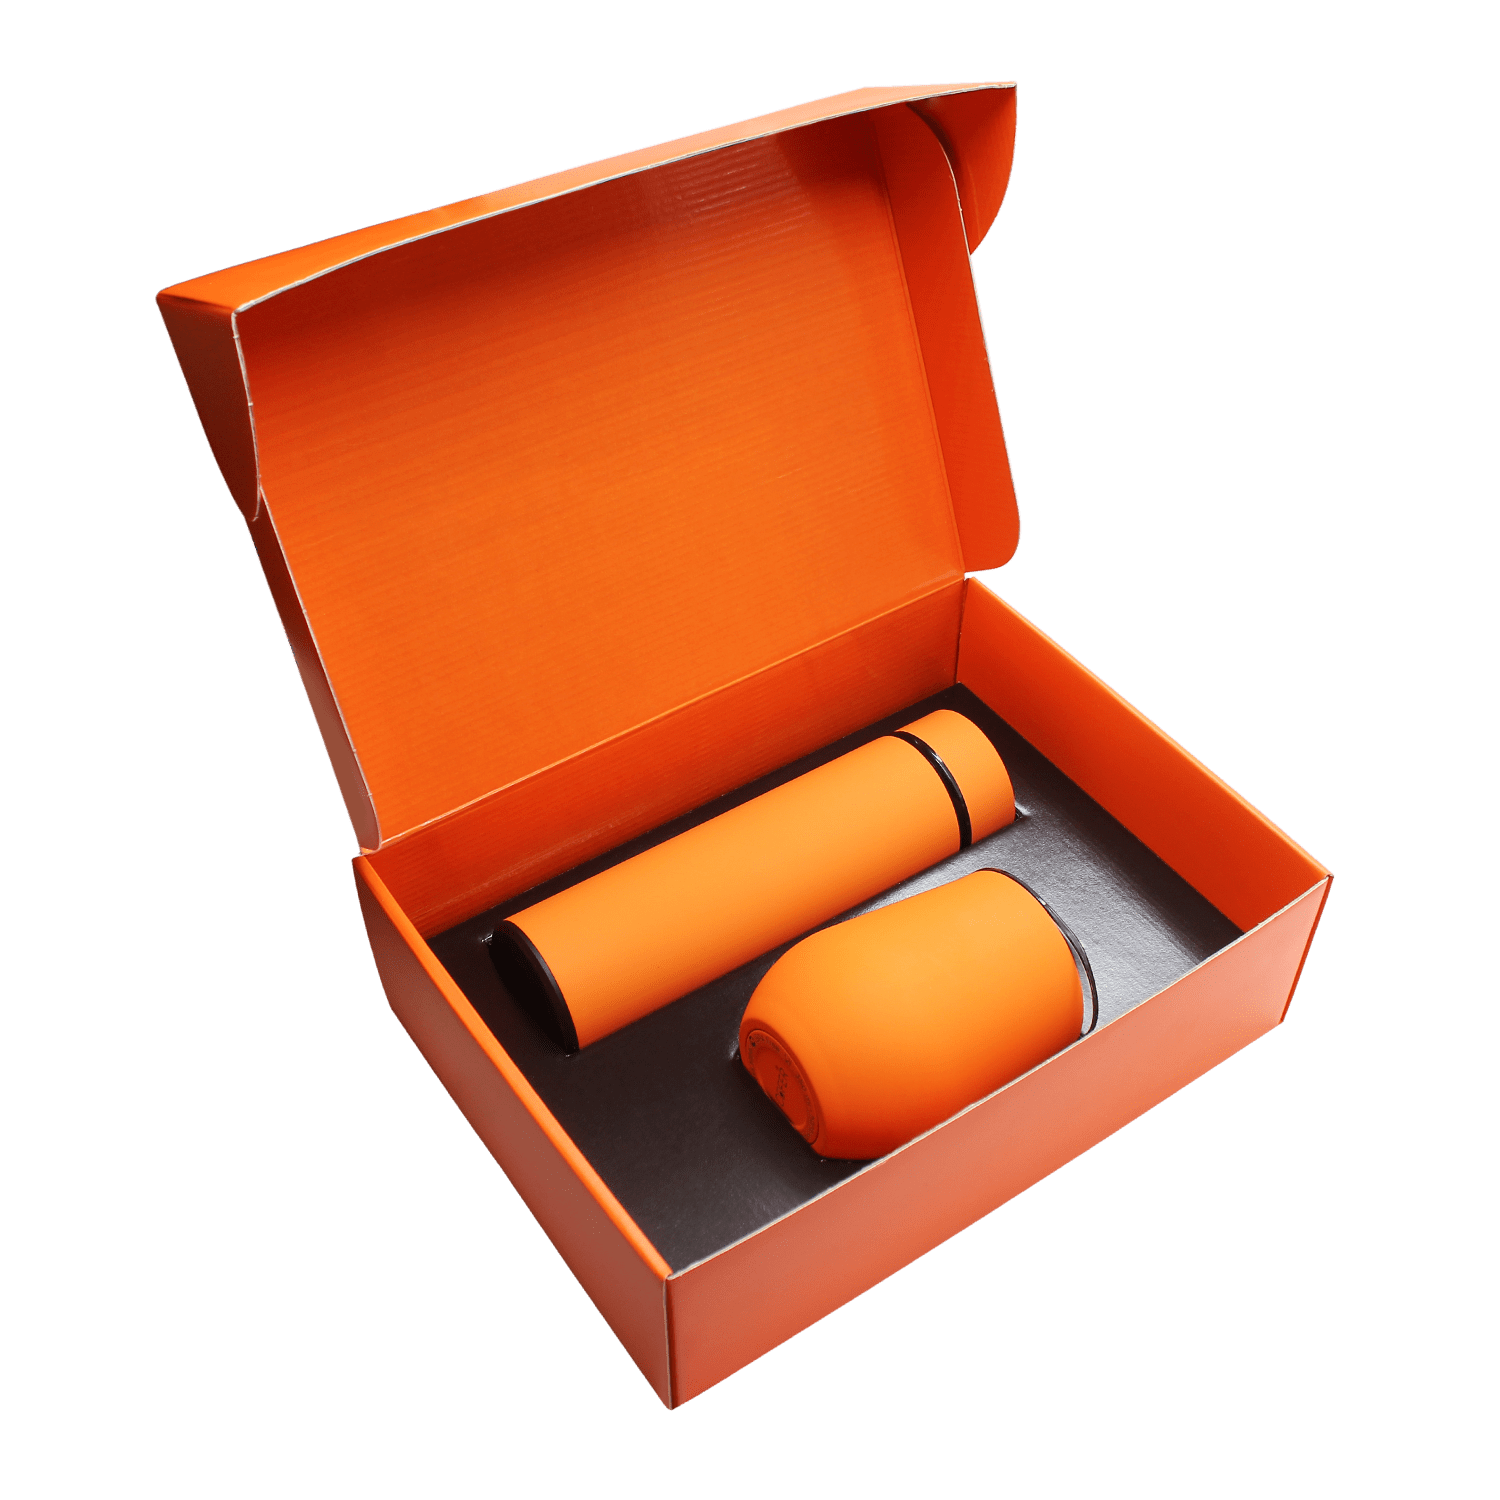 Набор Hot Box C (софт-тач) B (оранжевый), оранжевый, металл, микрогофрокартон